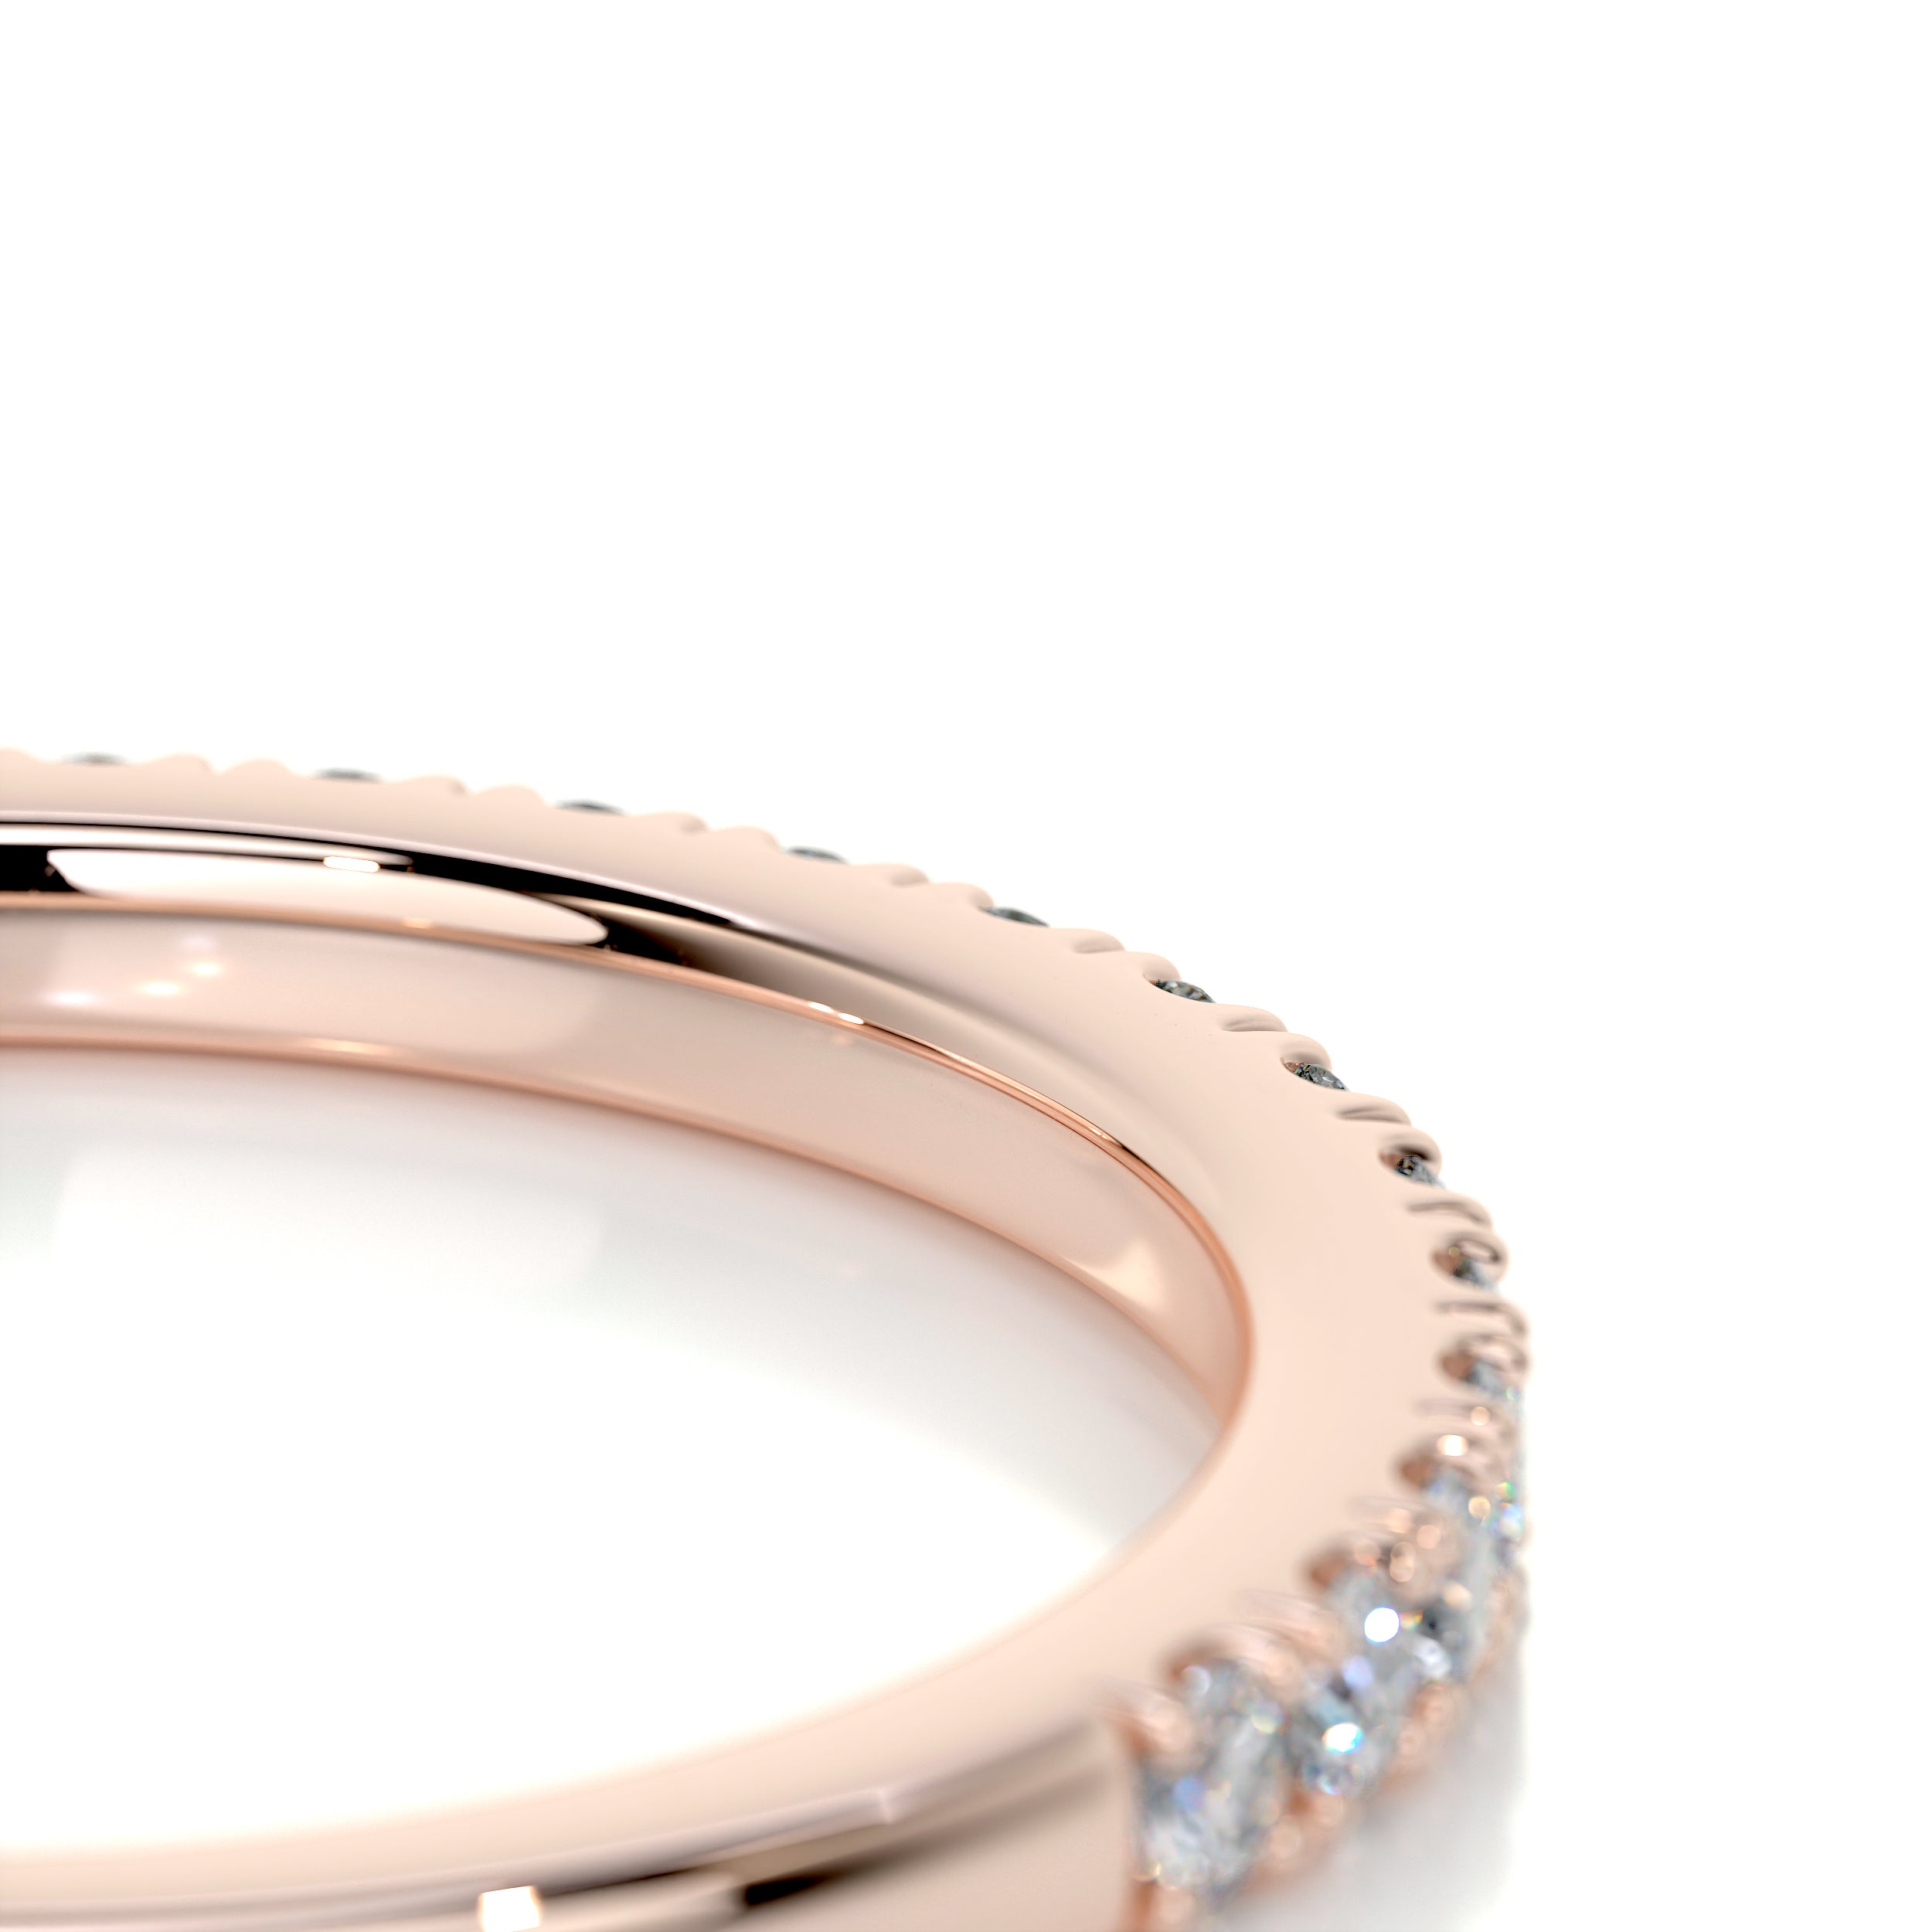 Stephanie Diamond Wedding Ring   (0.3 Carat) - 18K Rose Gold (RTS)